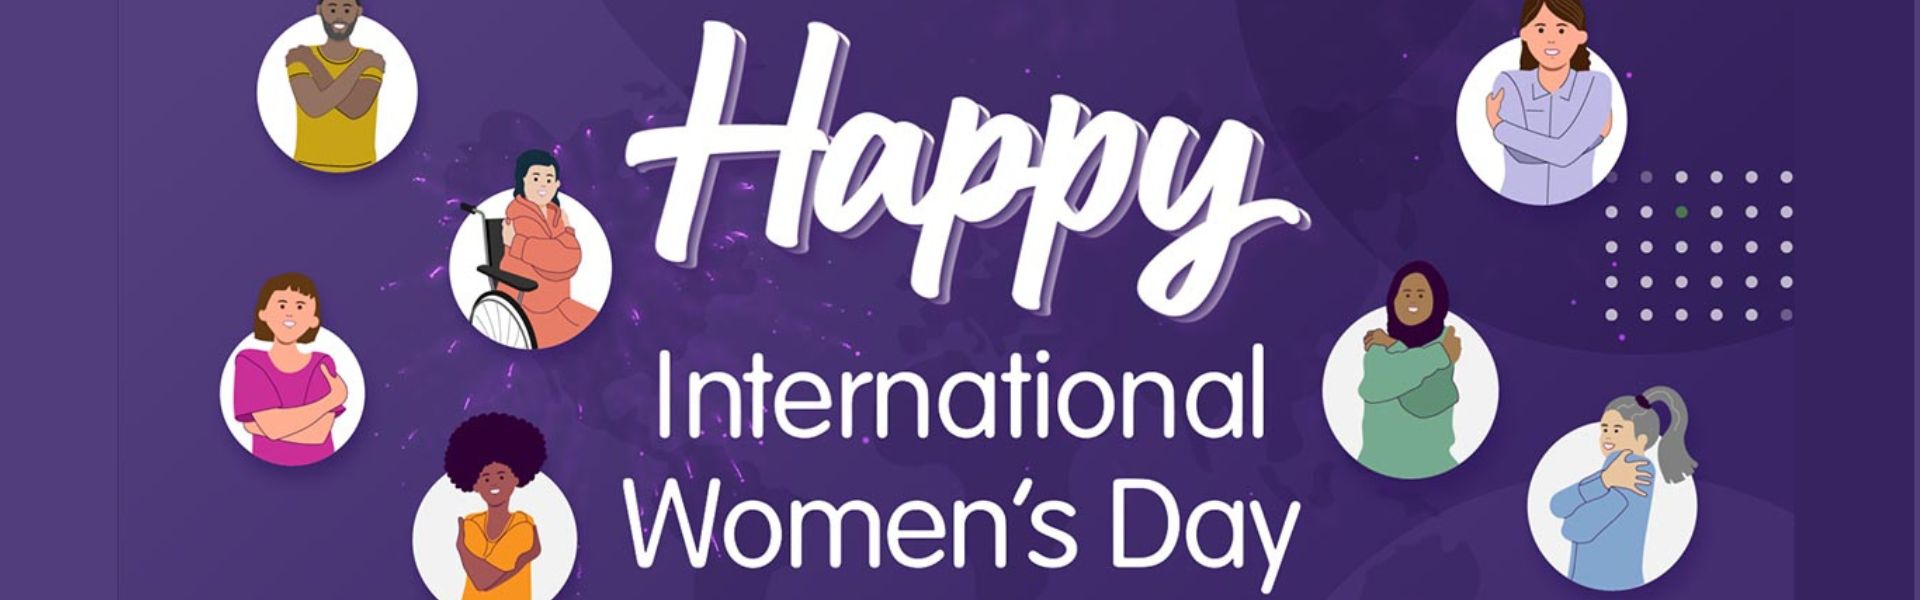 s International Women’s Day